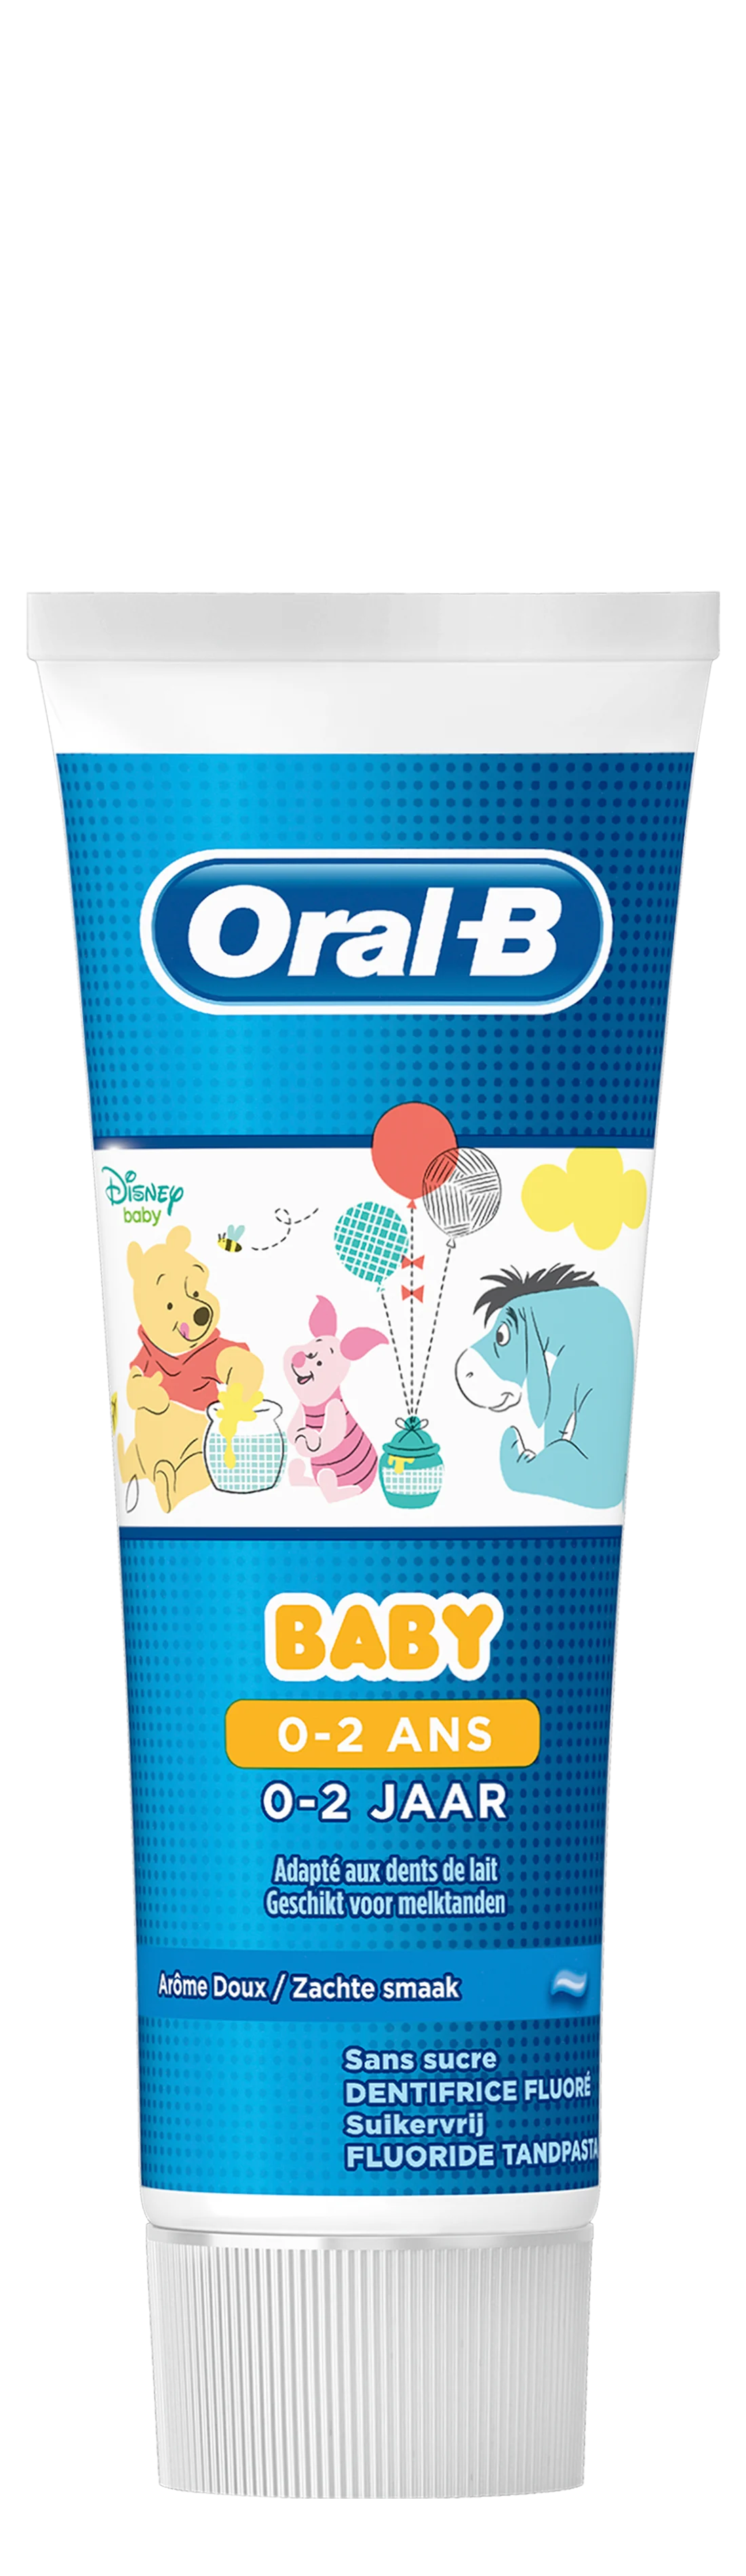 Oral-B Baby Winnie L’Ourson Dentifrice 75 ml, 0 à 2 Ans undefined